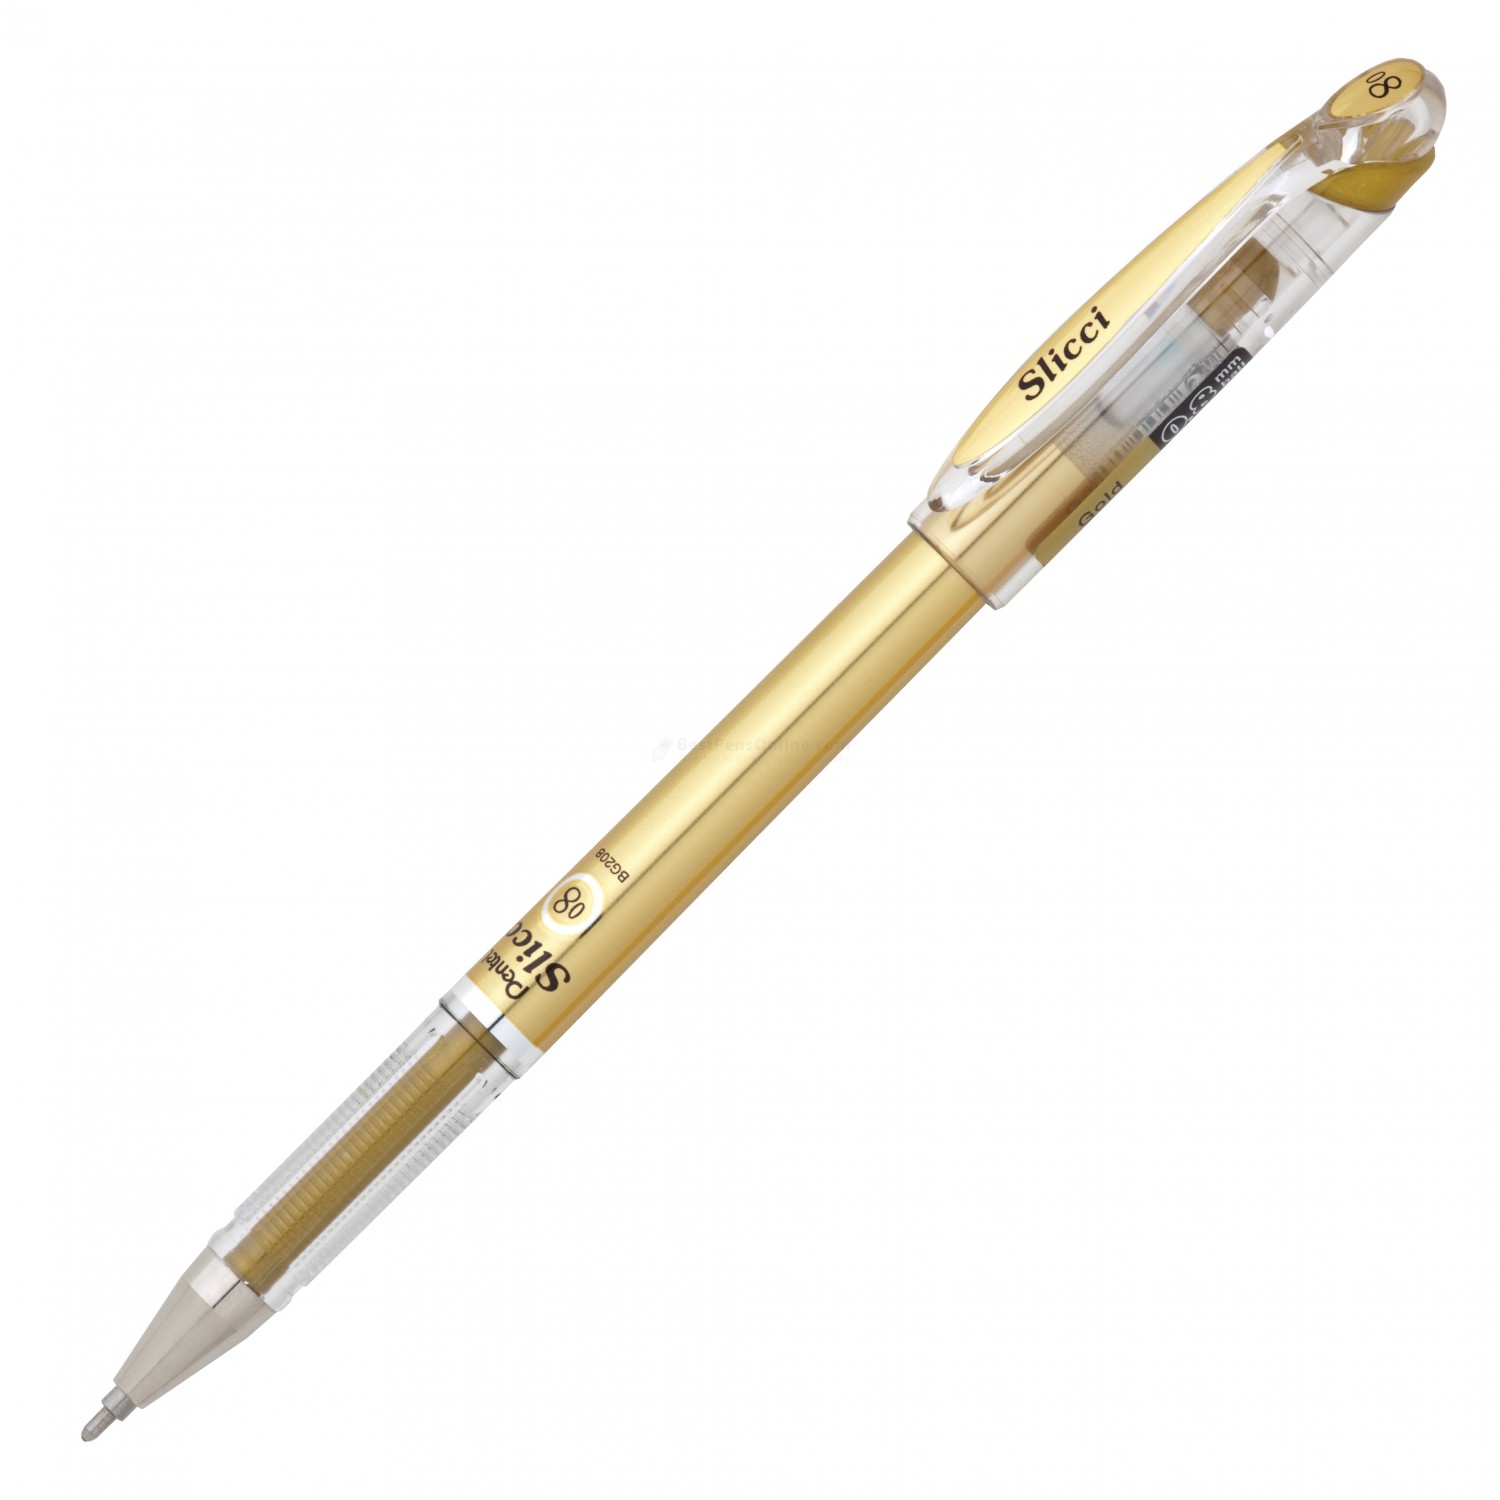 Pentel Slicci 0.8mm Gel Ink Pen, Metallic Gold (BG208-X)